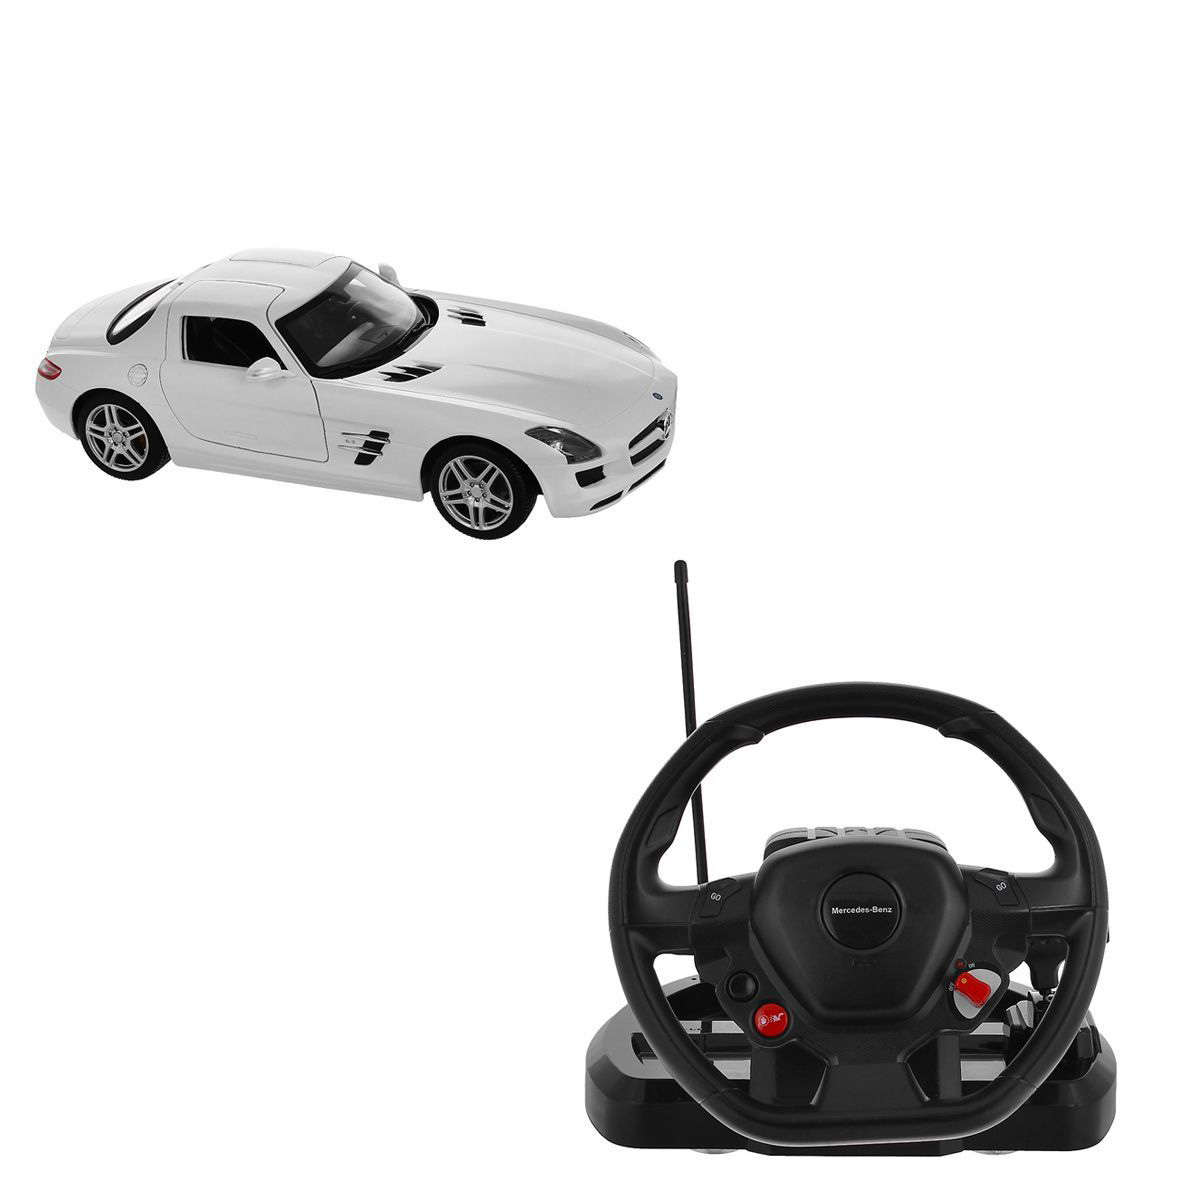 Машина р/у Mercedes-Benz SLS (на бат., свет, звук), с рулем, белая, 1:14